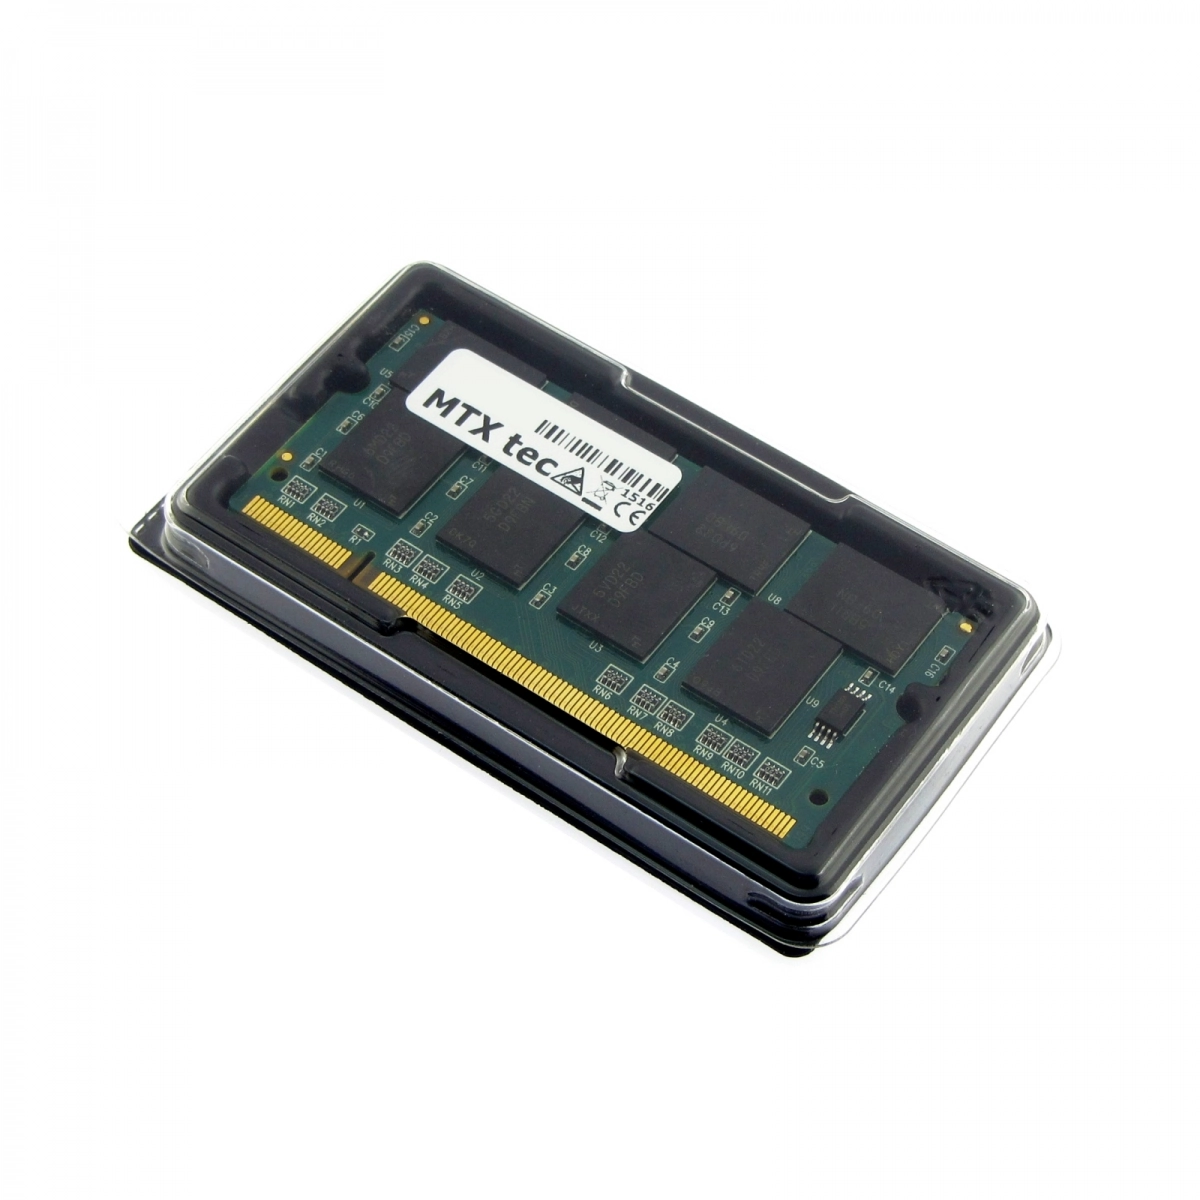 MTXtec Arbeitsspeicher 1 GB RAM für LENOVO ThinkPad T30 (2366)